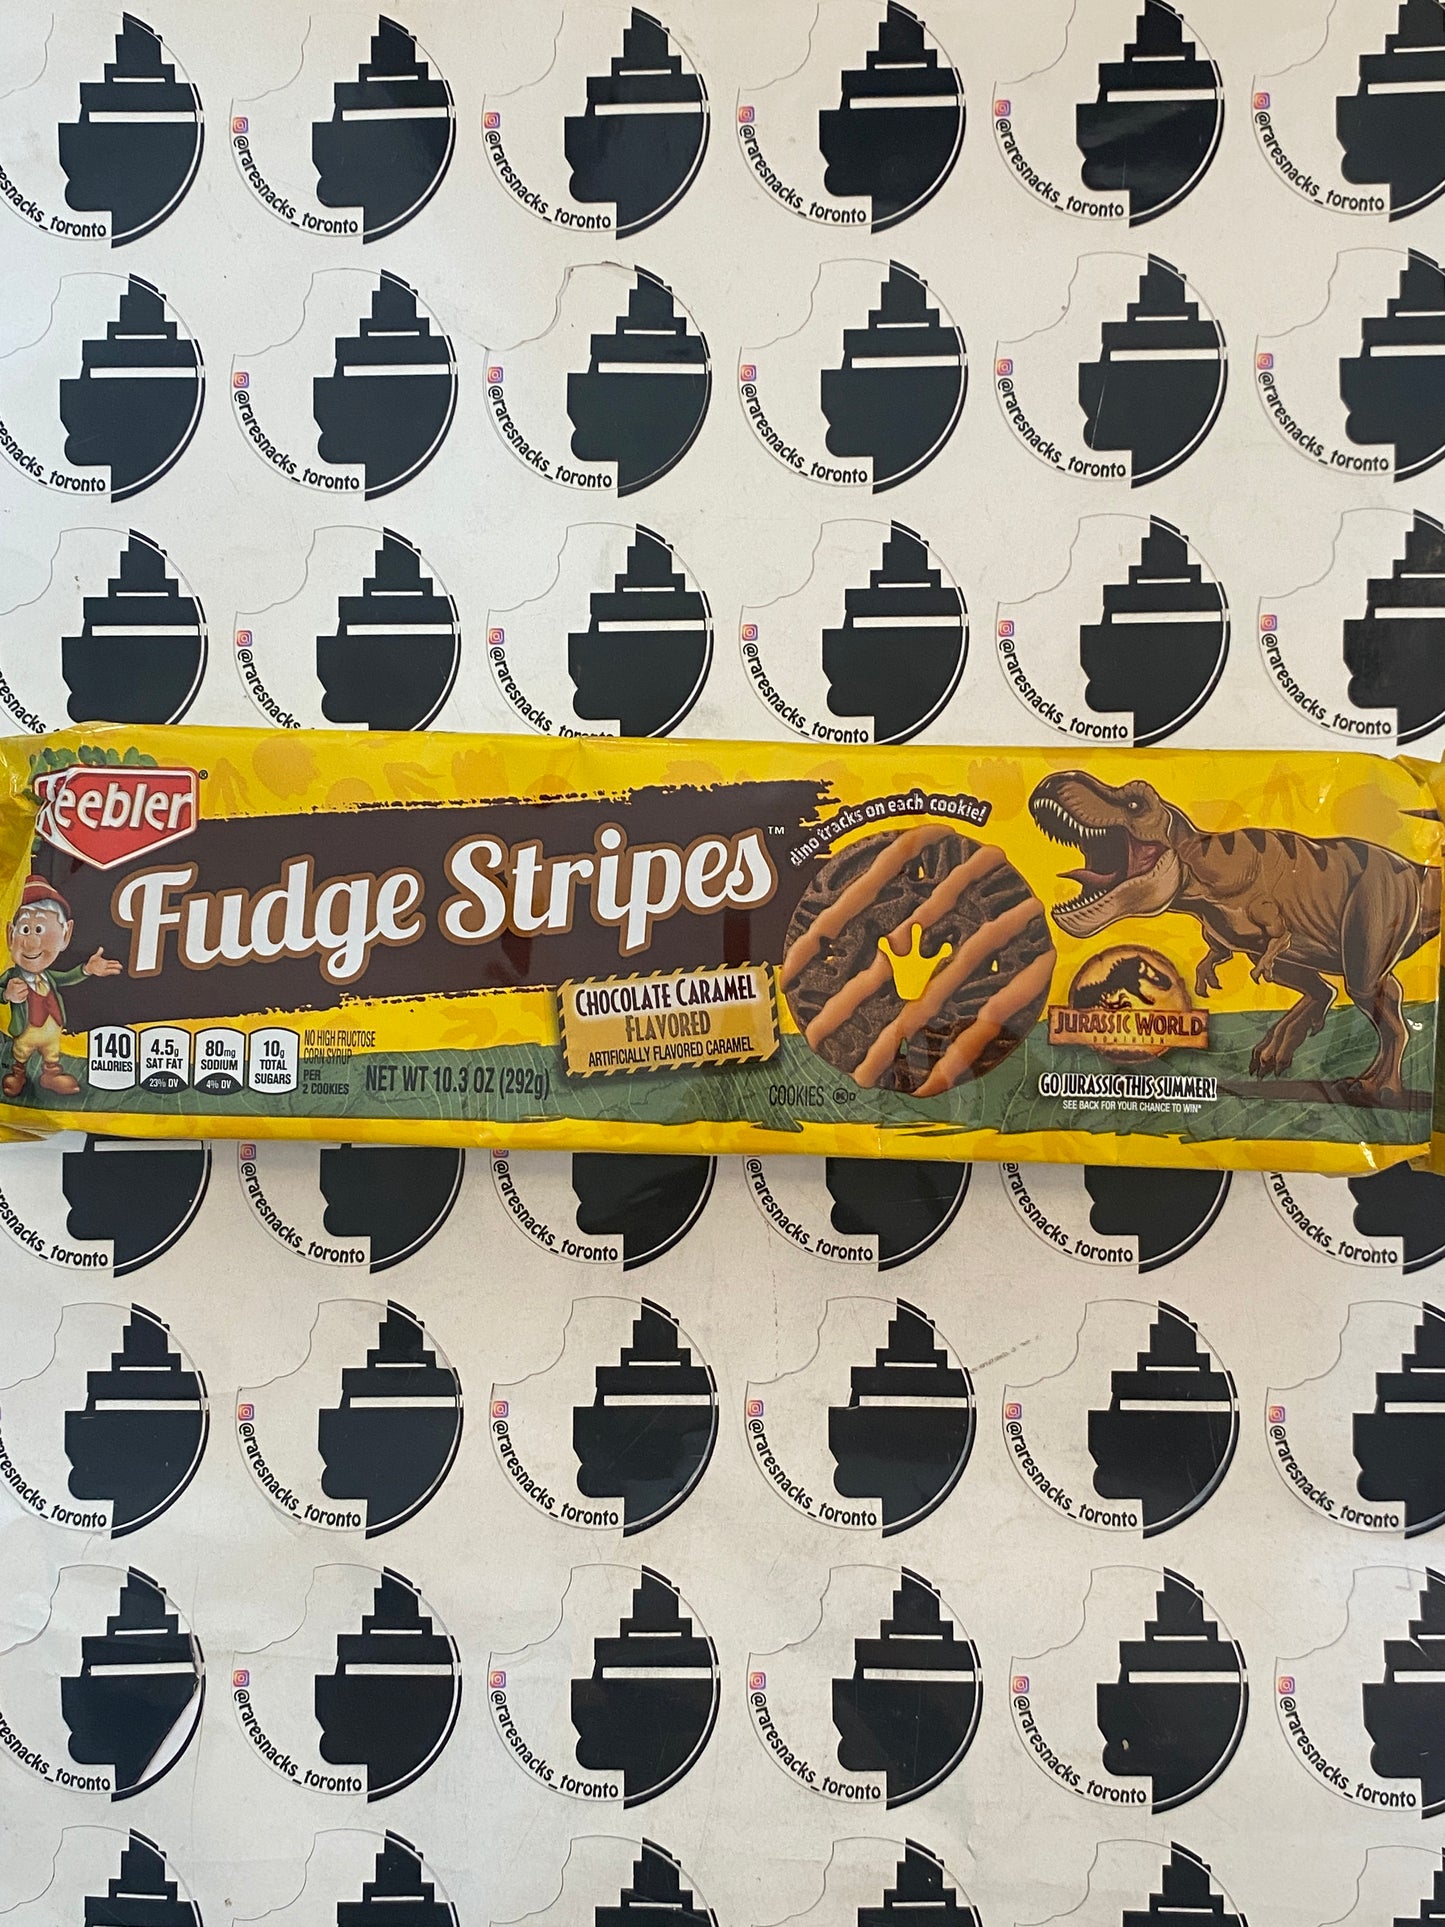 Keebler Fudge Stripes Chocolate Caramel